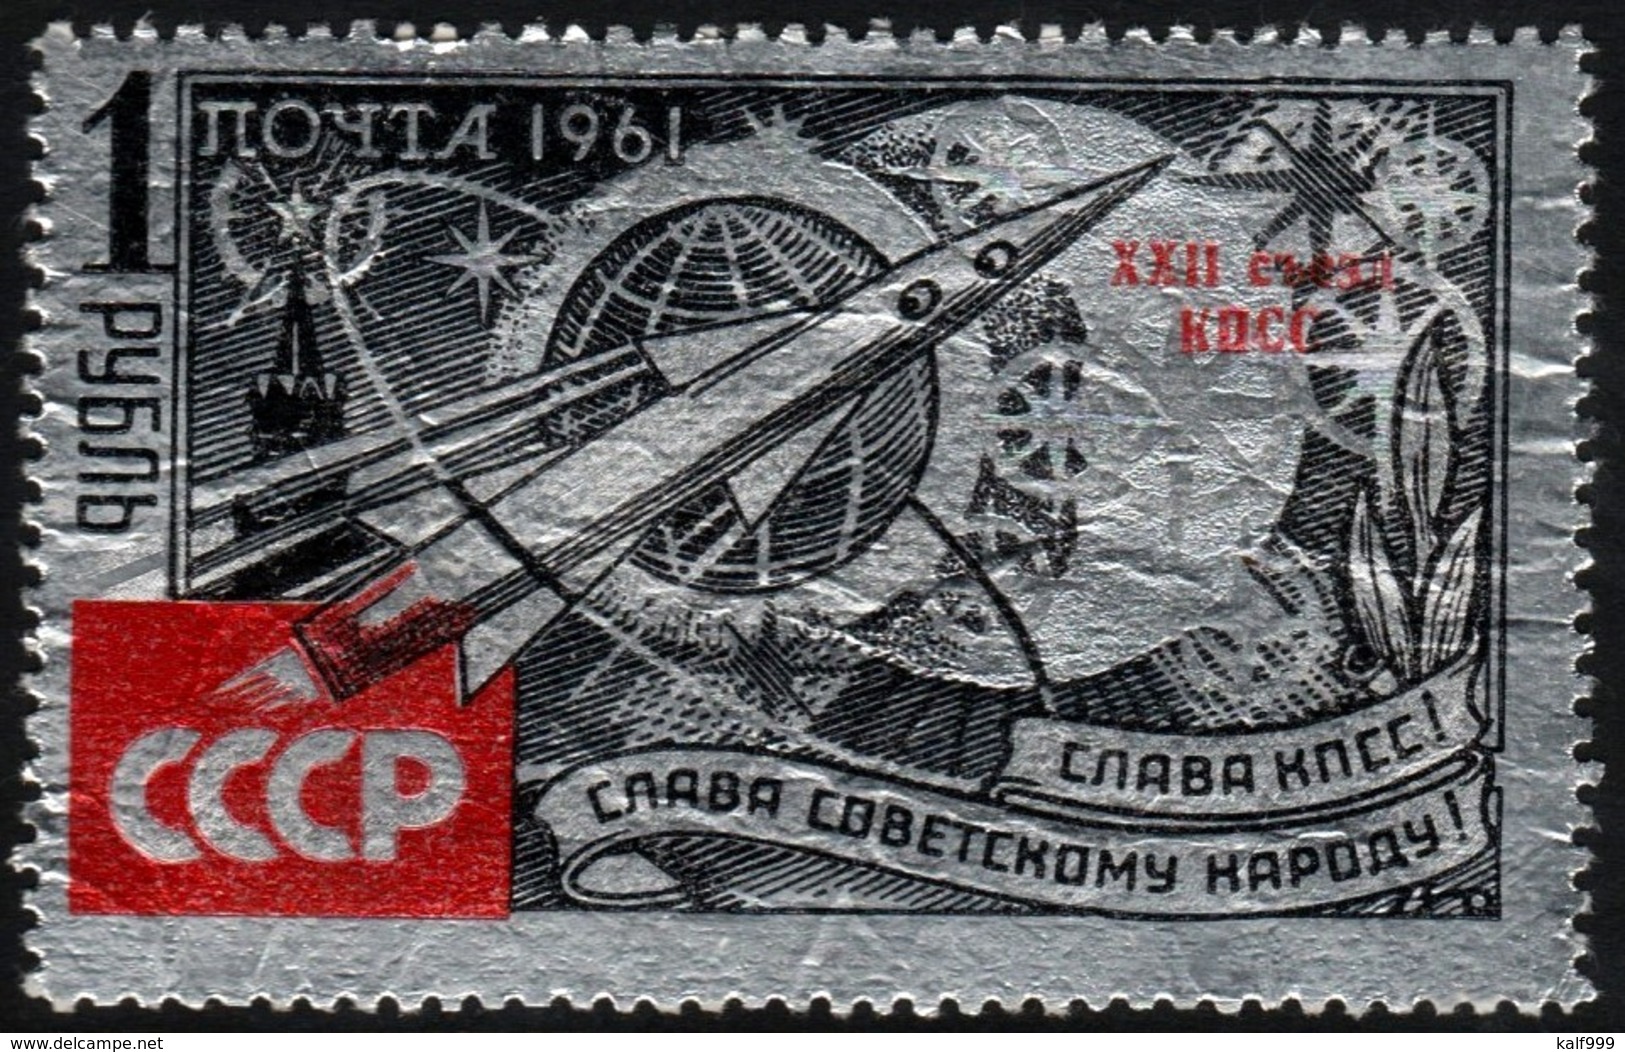 ~~~  Sowjet Union 1961 - Space Silver Foil Overprint - Mi. 2541 MNH ** OG  CV 40.00 Euro ~~~ - Ongebruikt